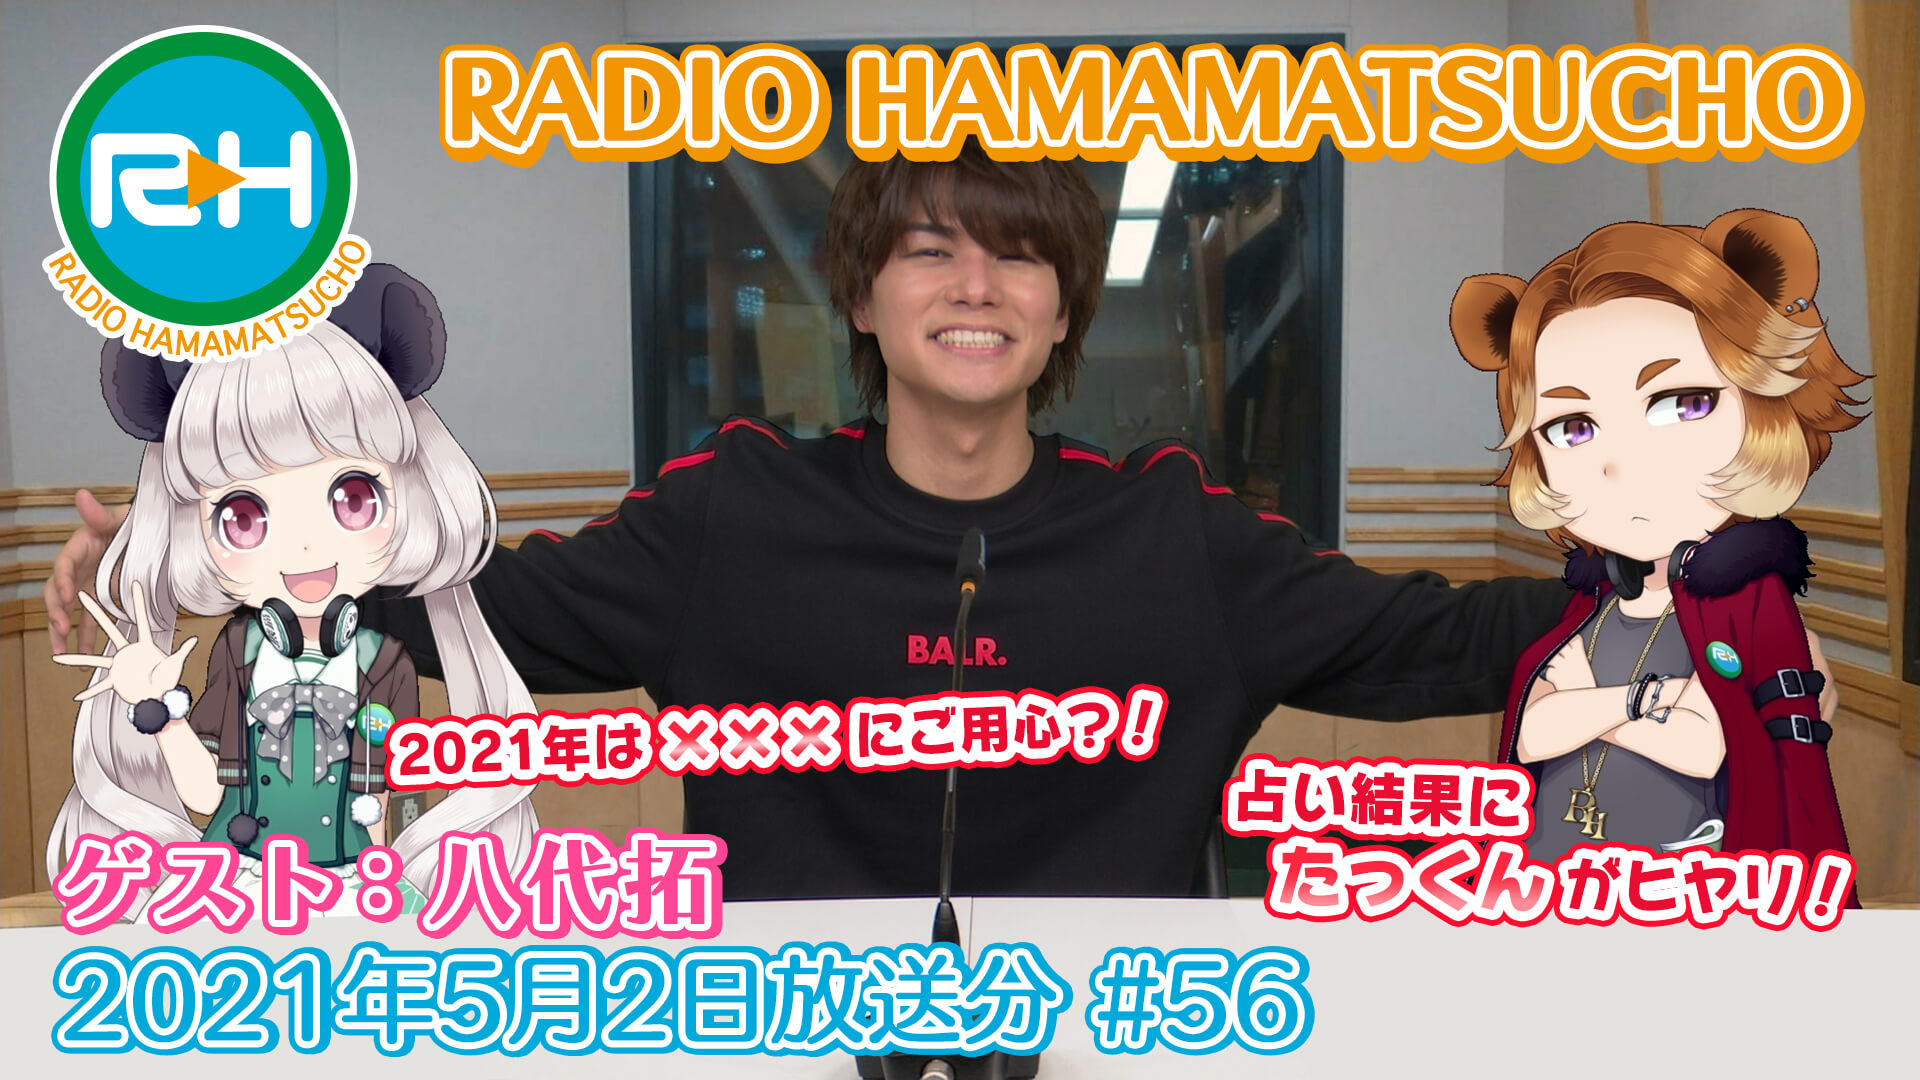 RADIO HAMAMATSUCHO 第56回 (2021年5月2日放送分) ゲスト: 八代拓